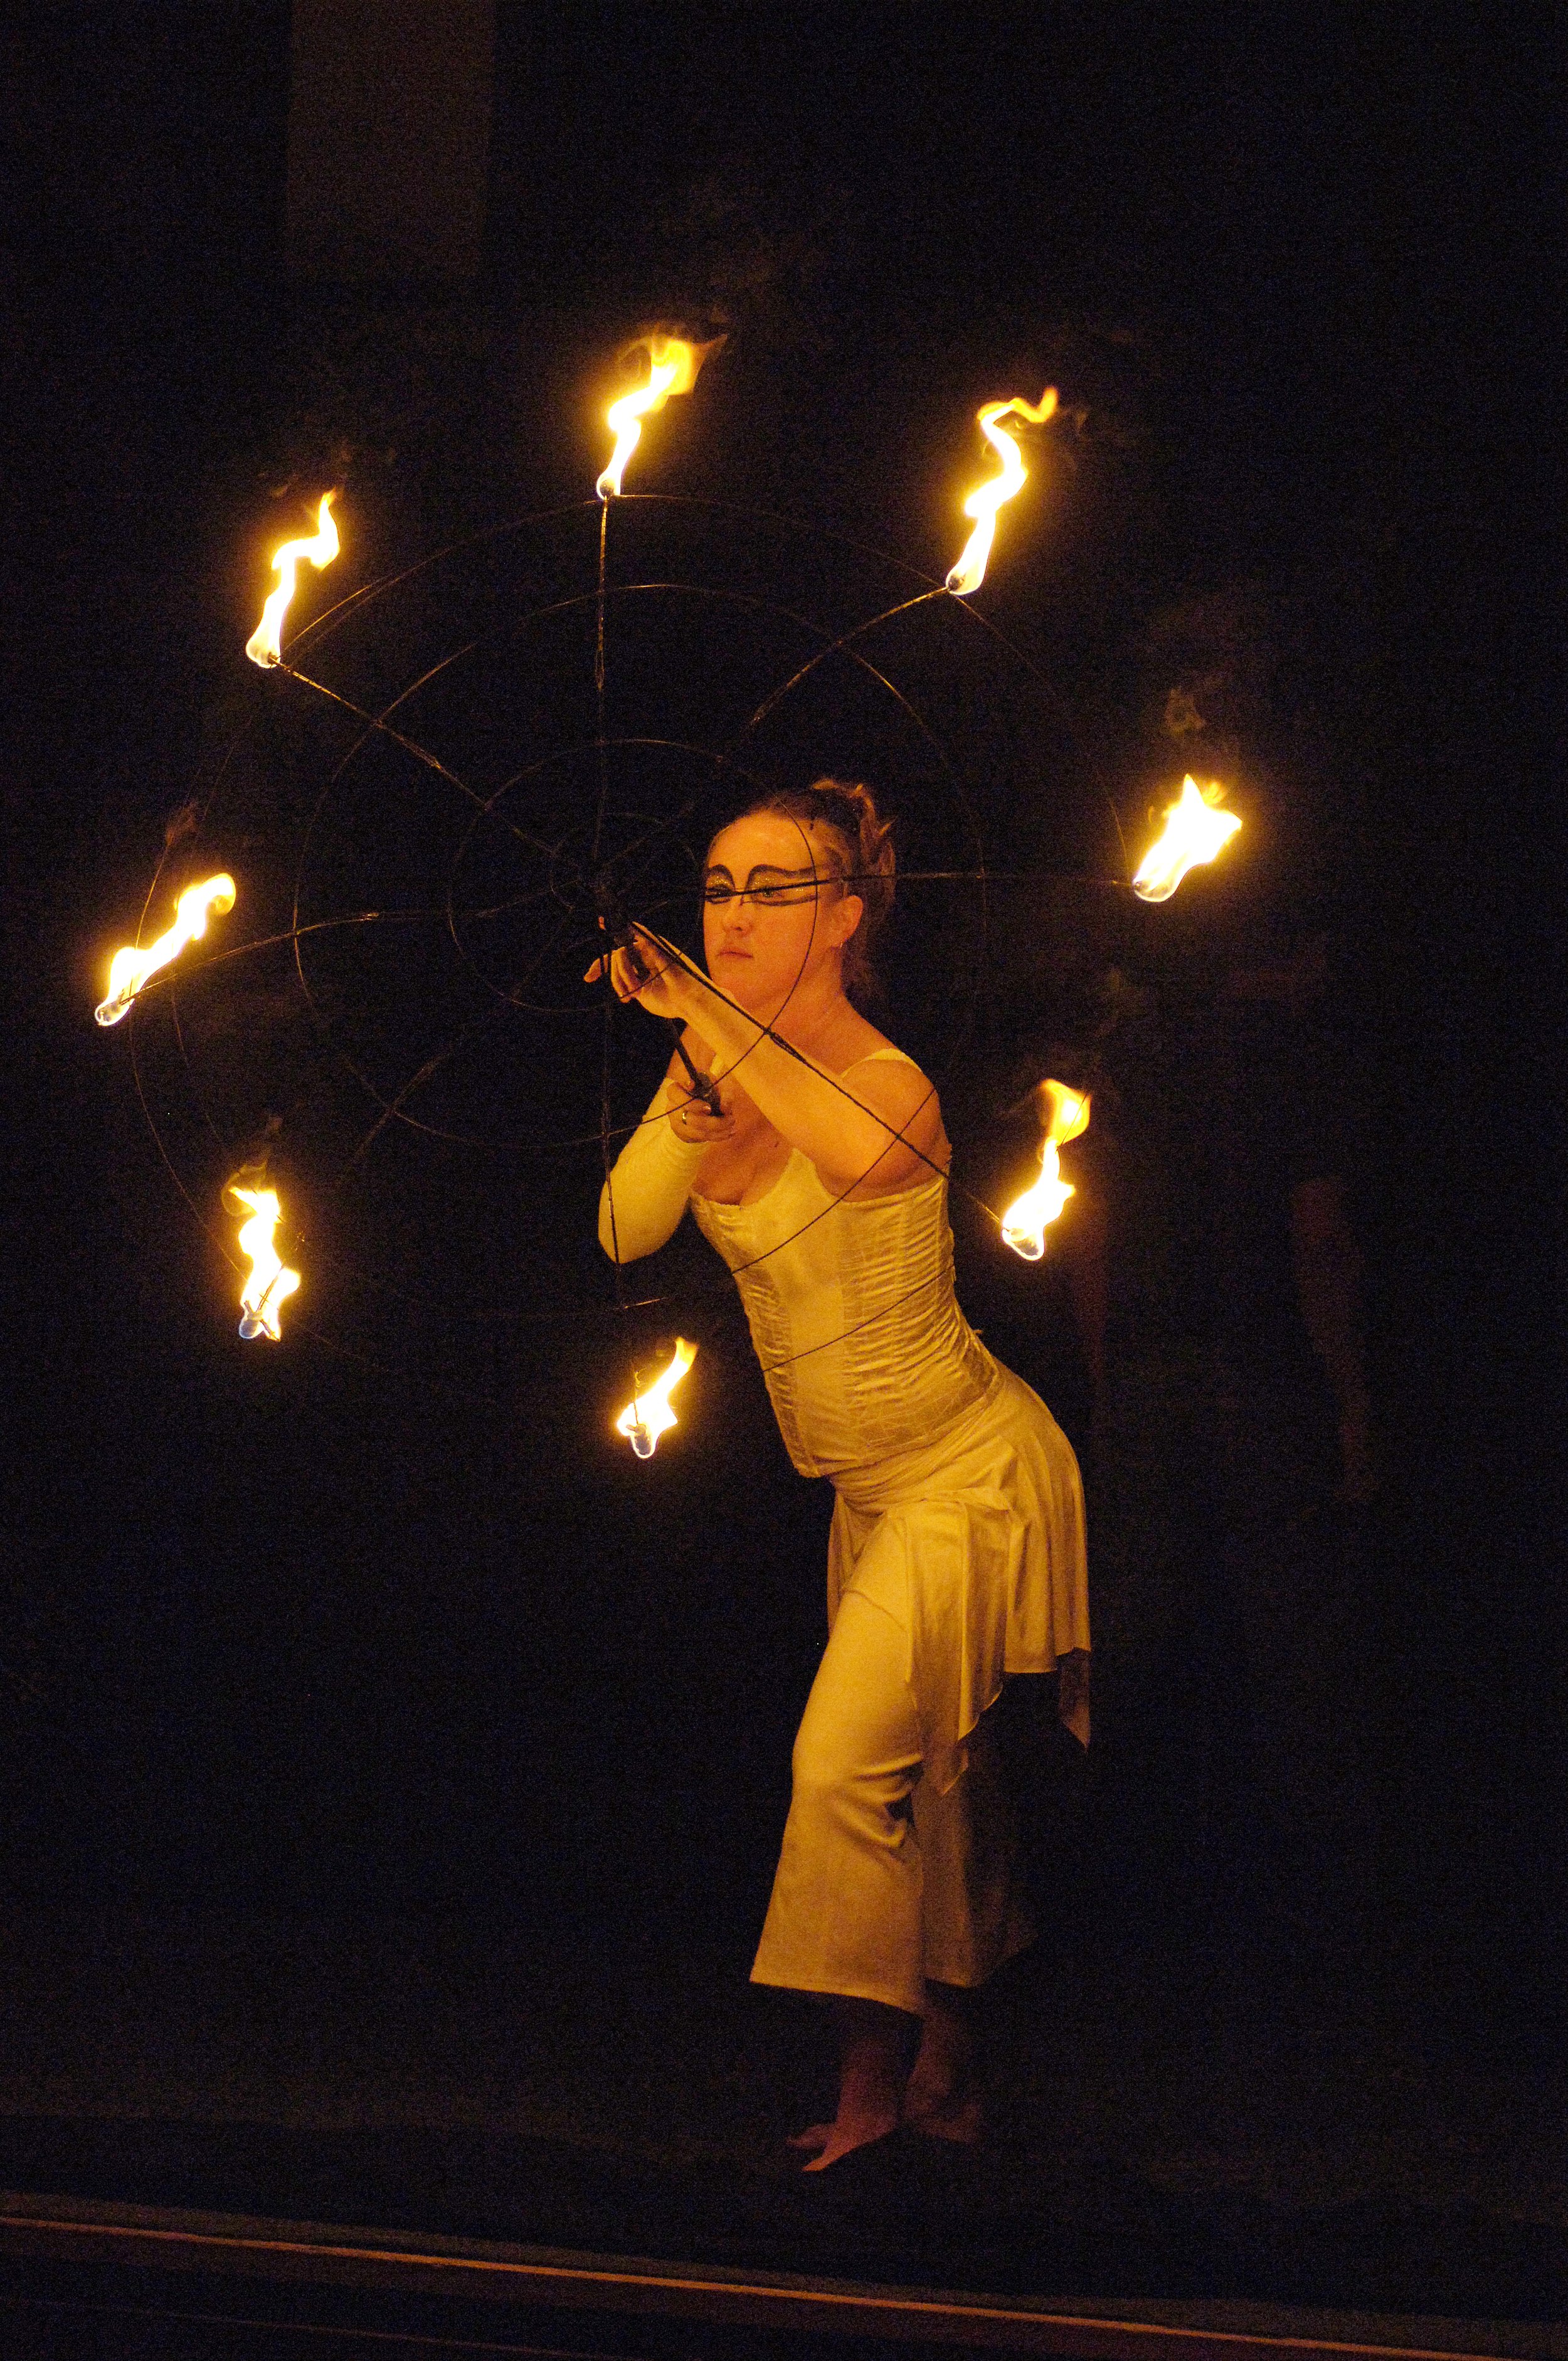  Kara Snider, Fire Dancers 